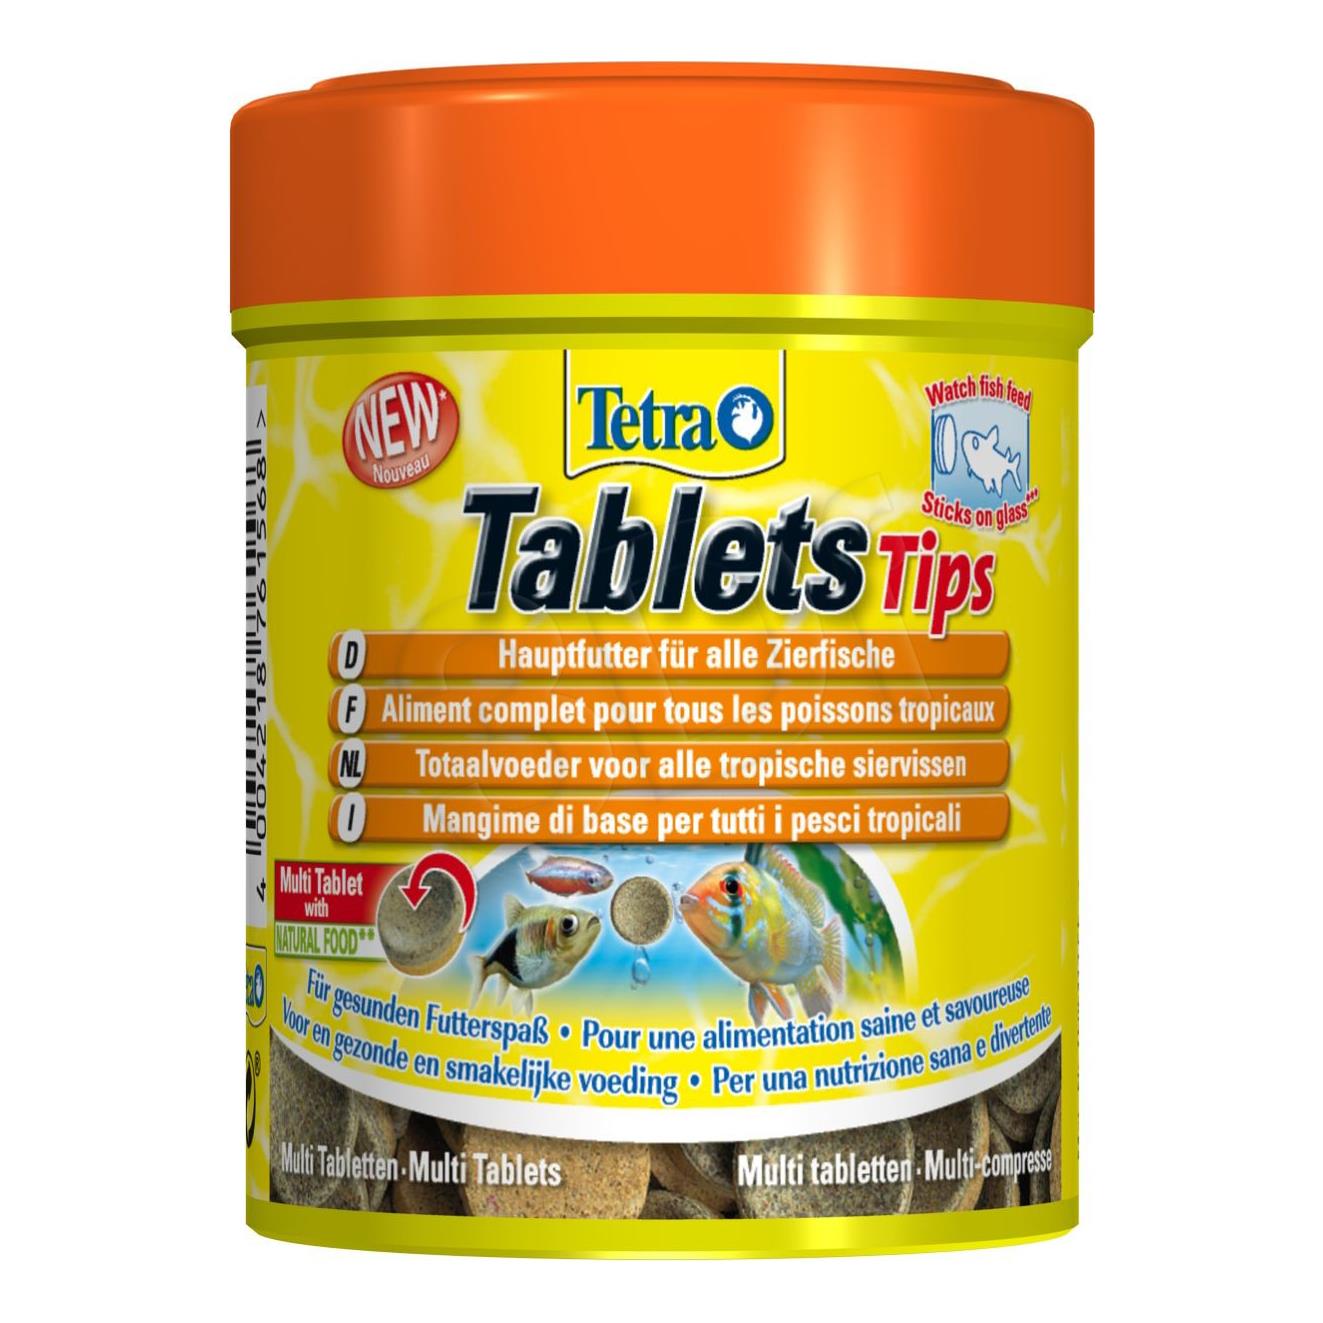 Tetra Tablets Tips 165 Tab. barība suņiem